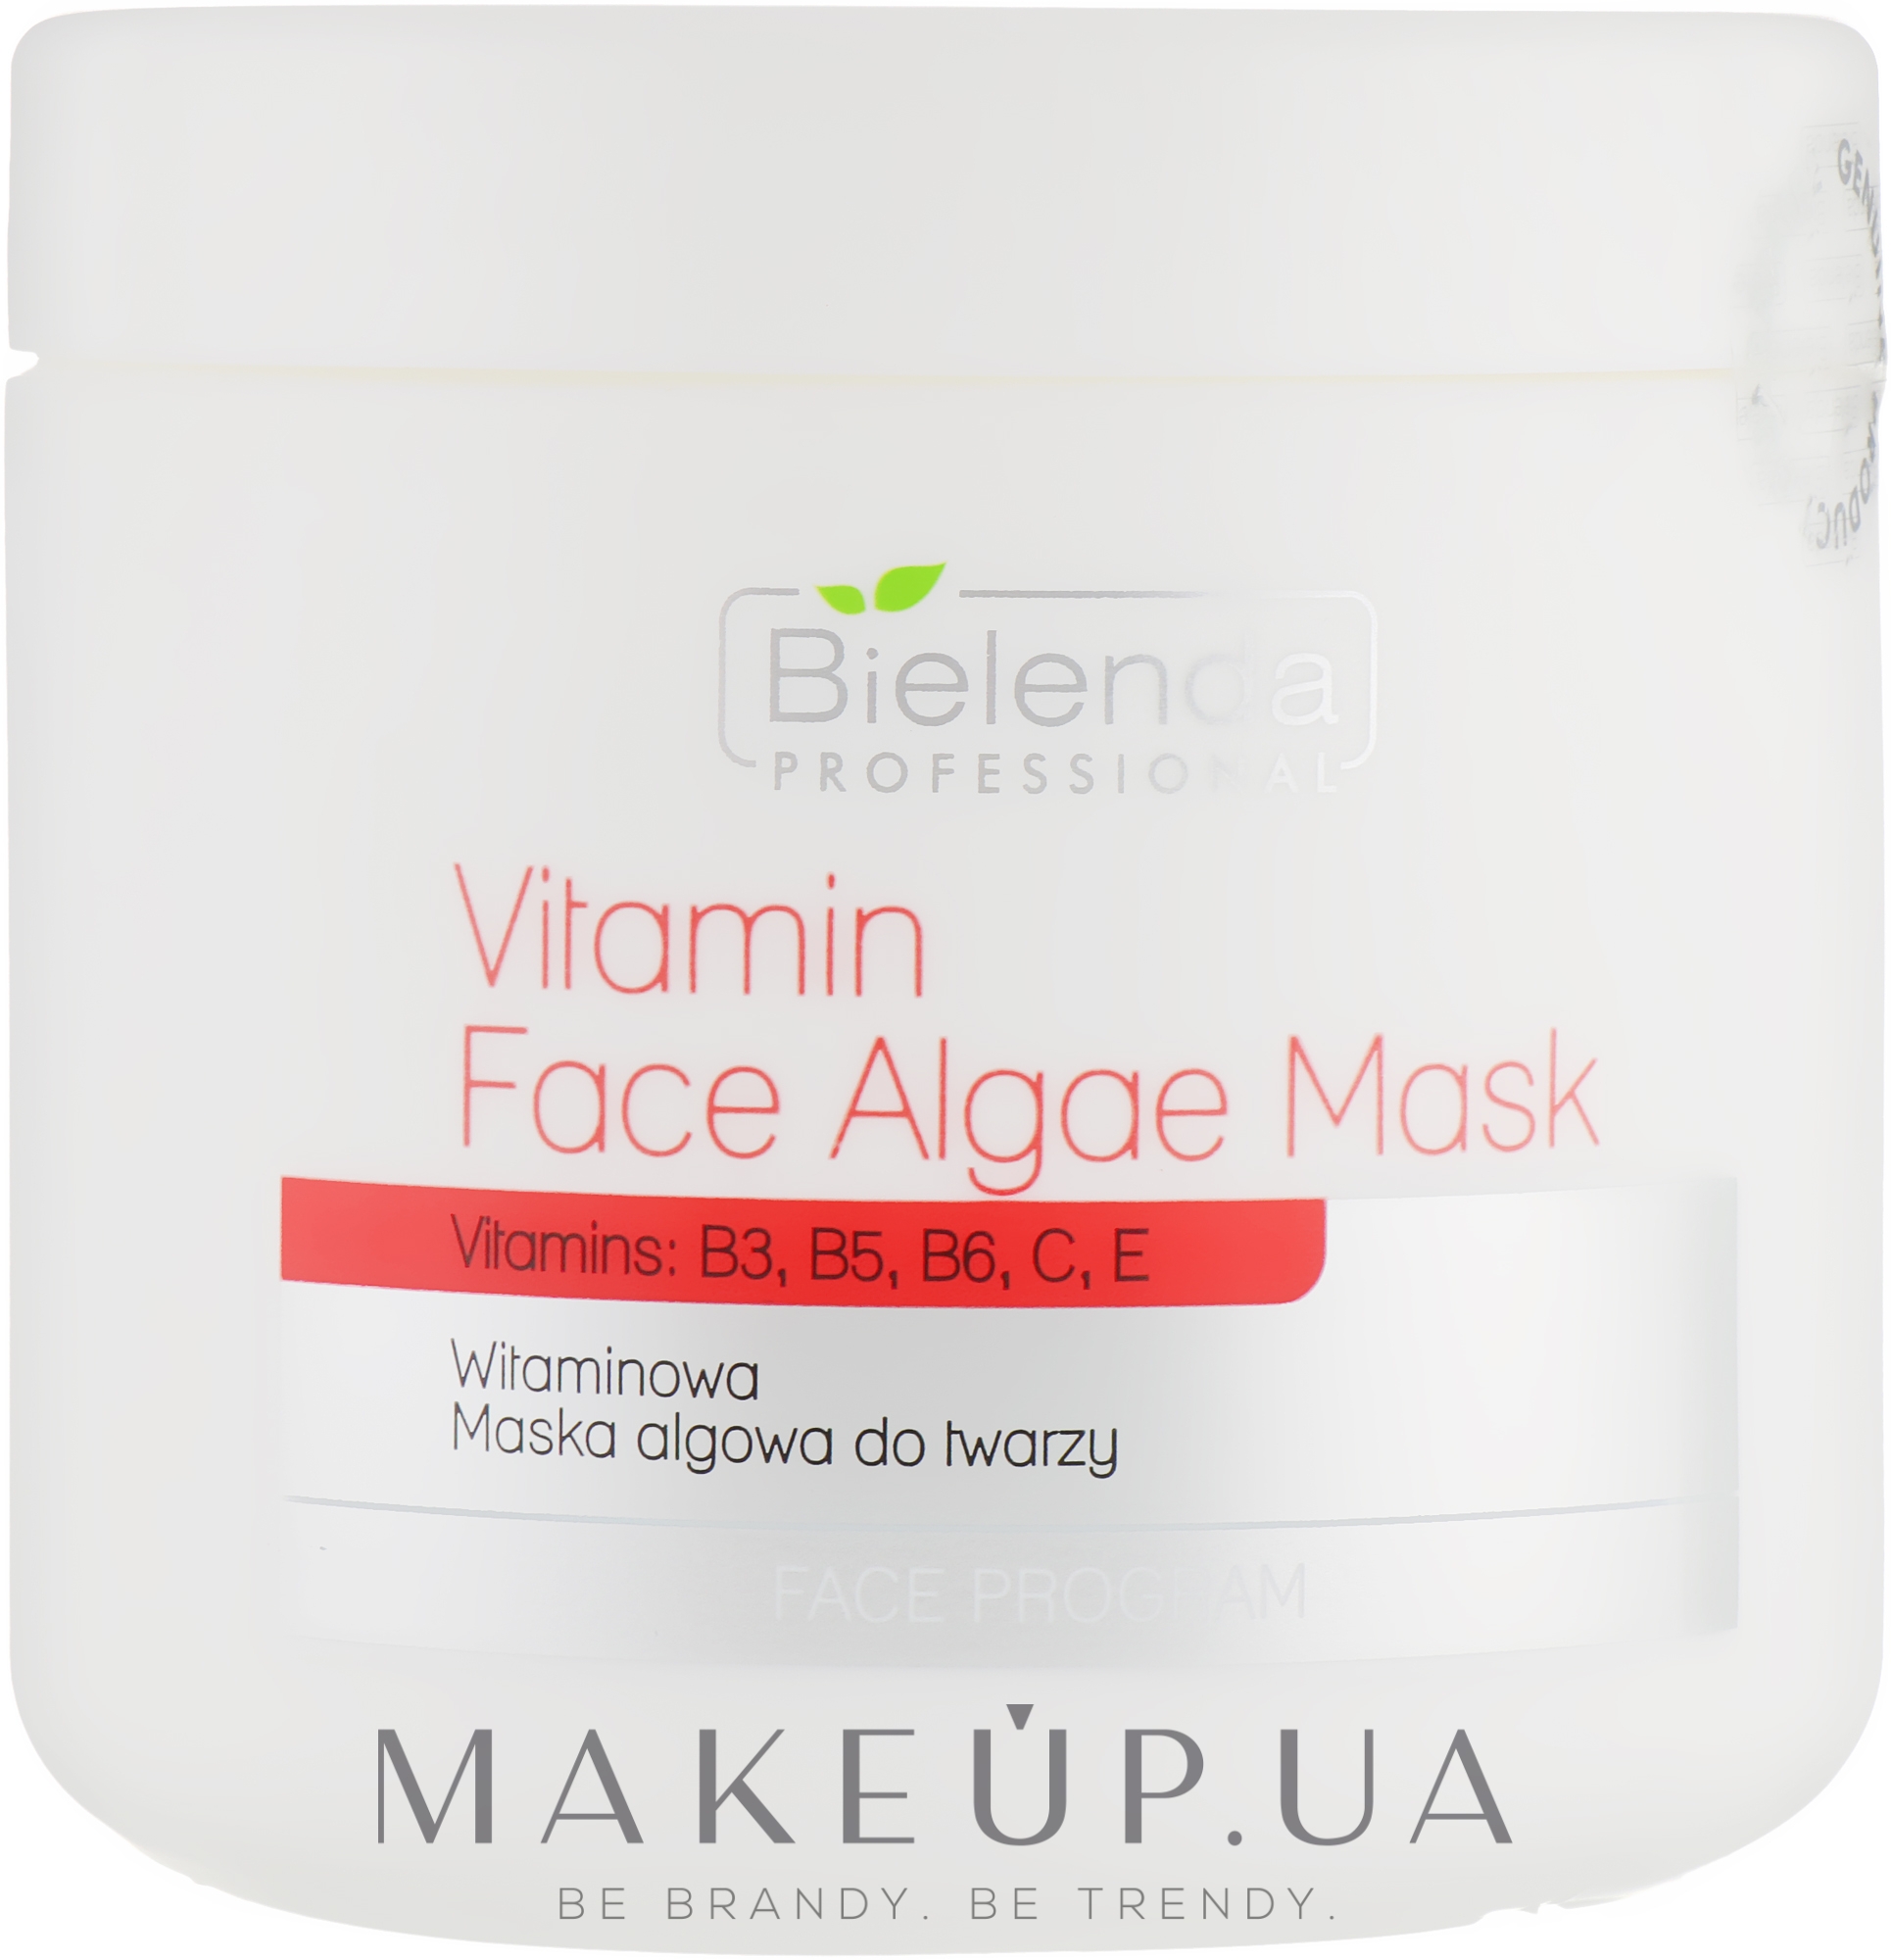 Вітамінна альгінатна маска для обличчя  - Bielenda Professional Program Face Vitamin Face Algae Mask — фото 190g